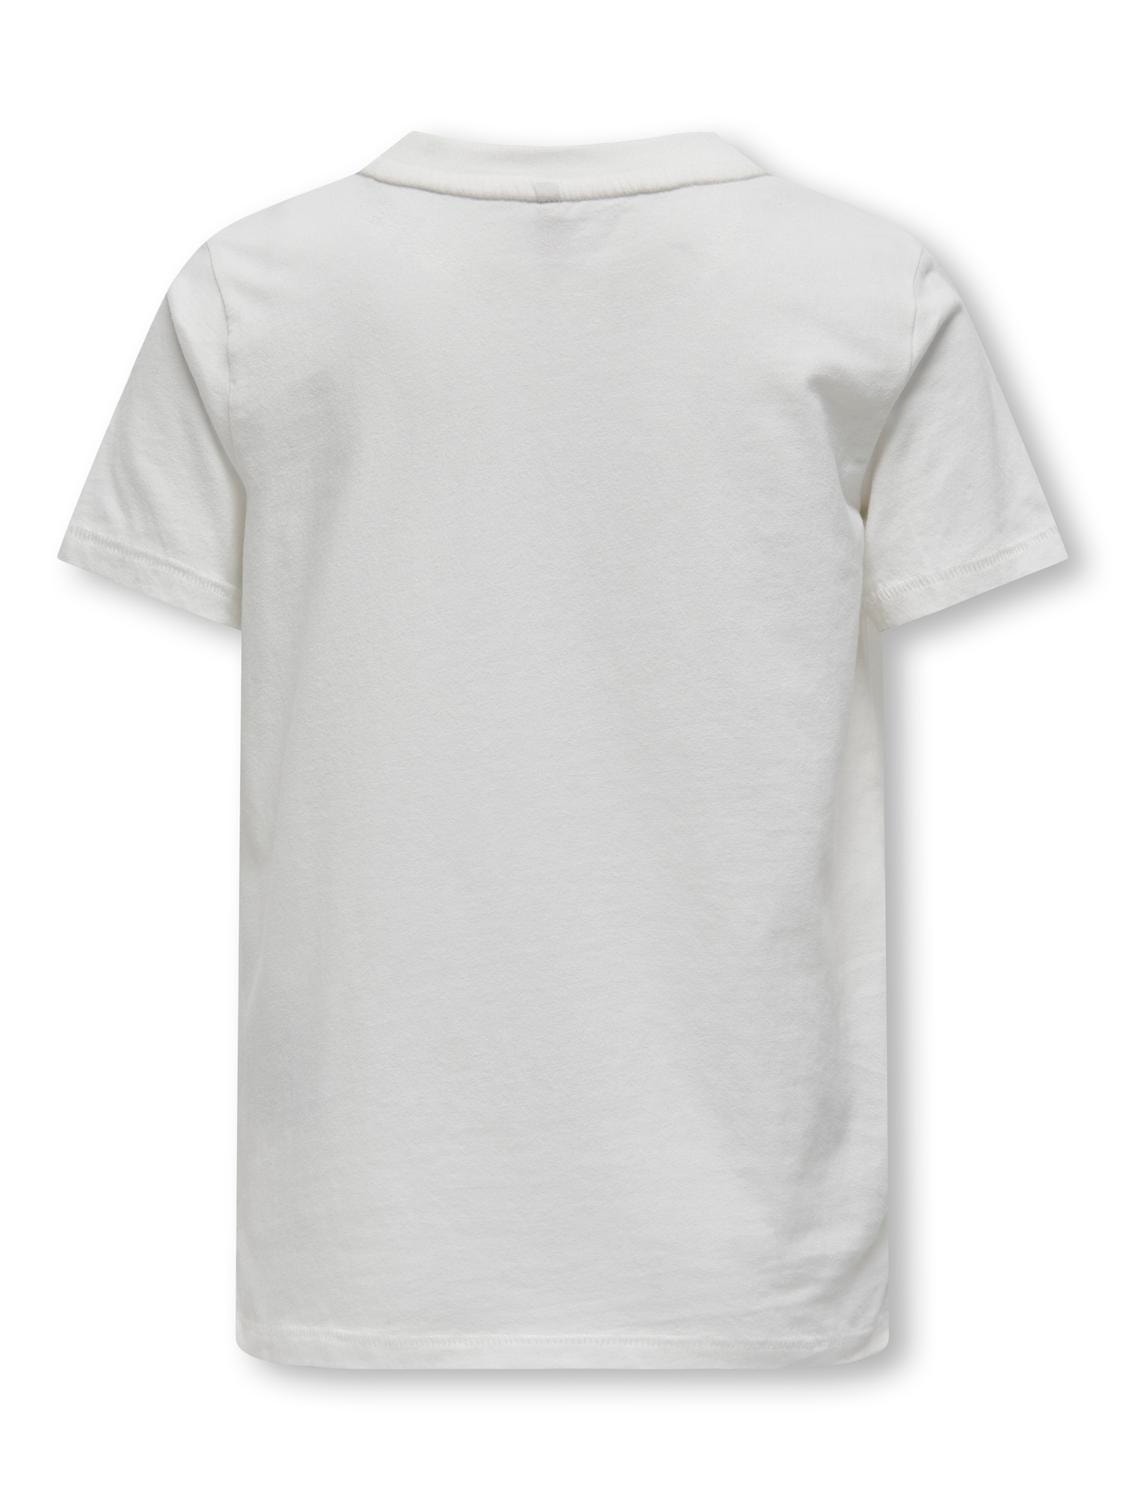 ONLY Box Fit Round Neck T-Shirt -Cloud Dancer - 15331149